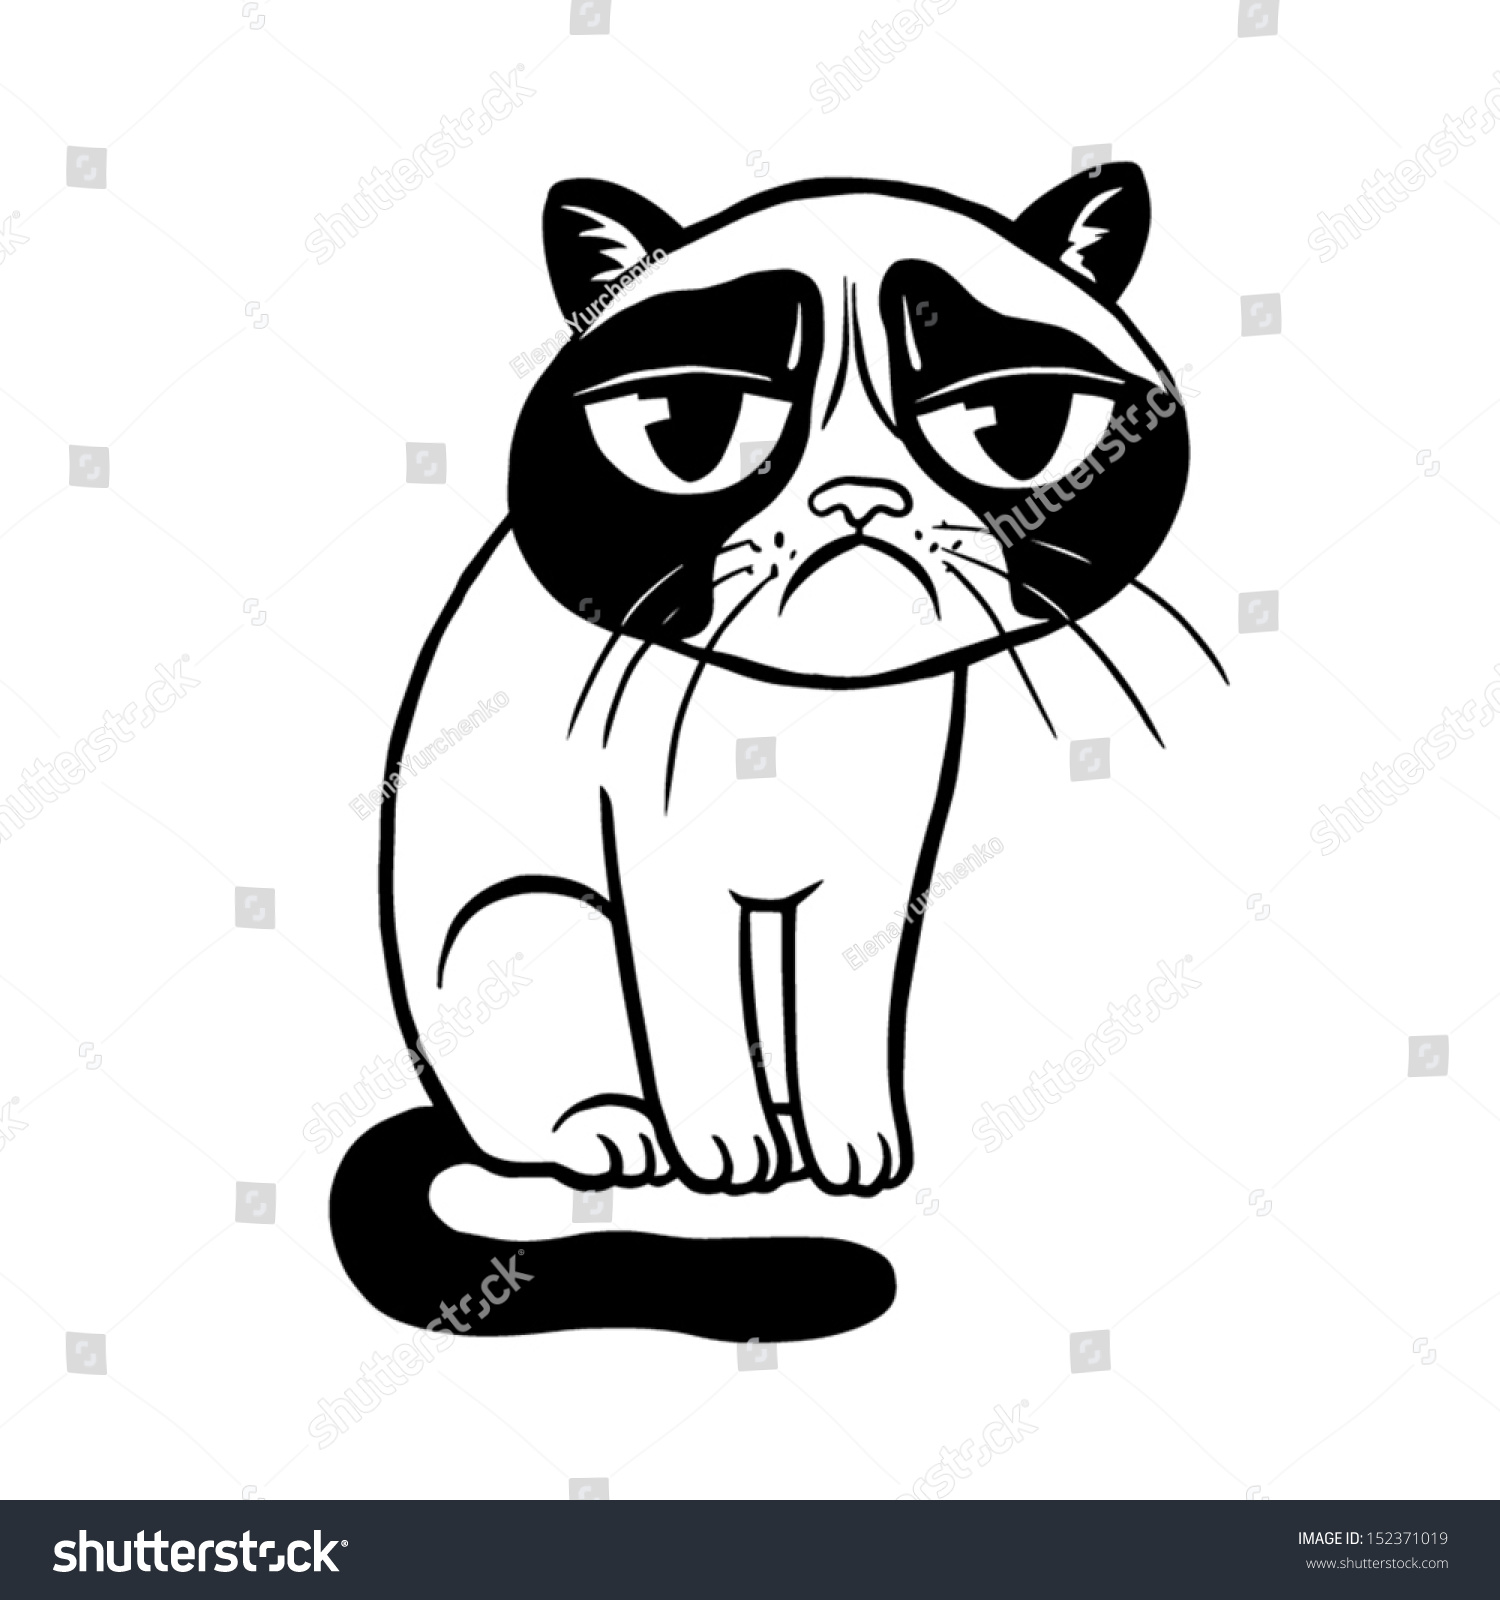 Clip Art Of Grumpy Cat Black White Vector Illustration Stock ...